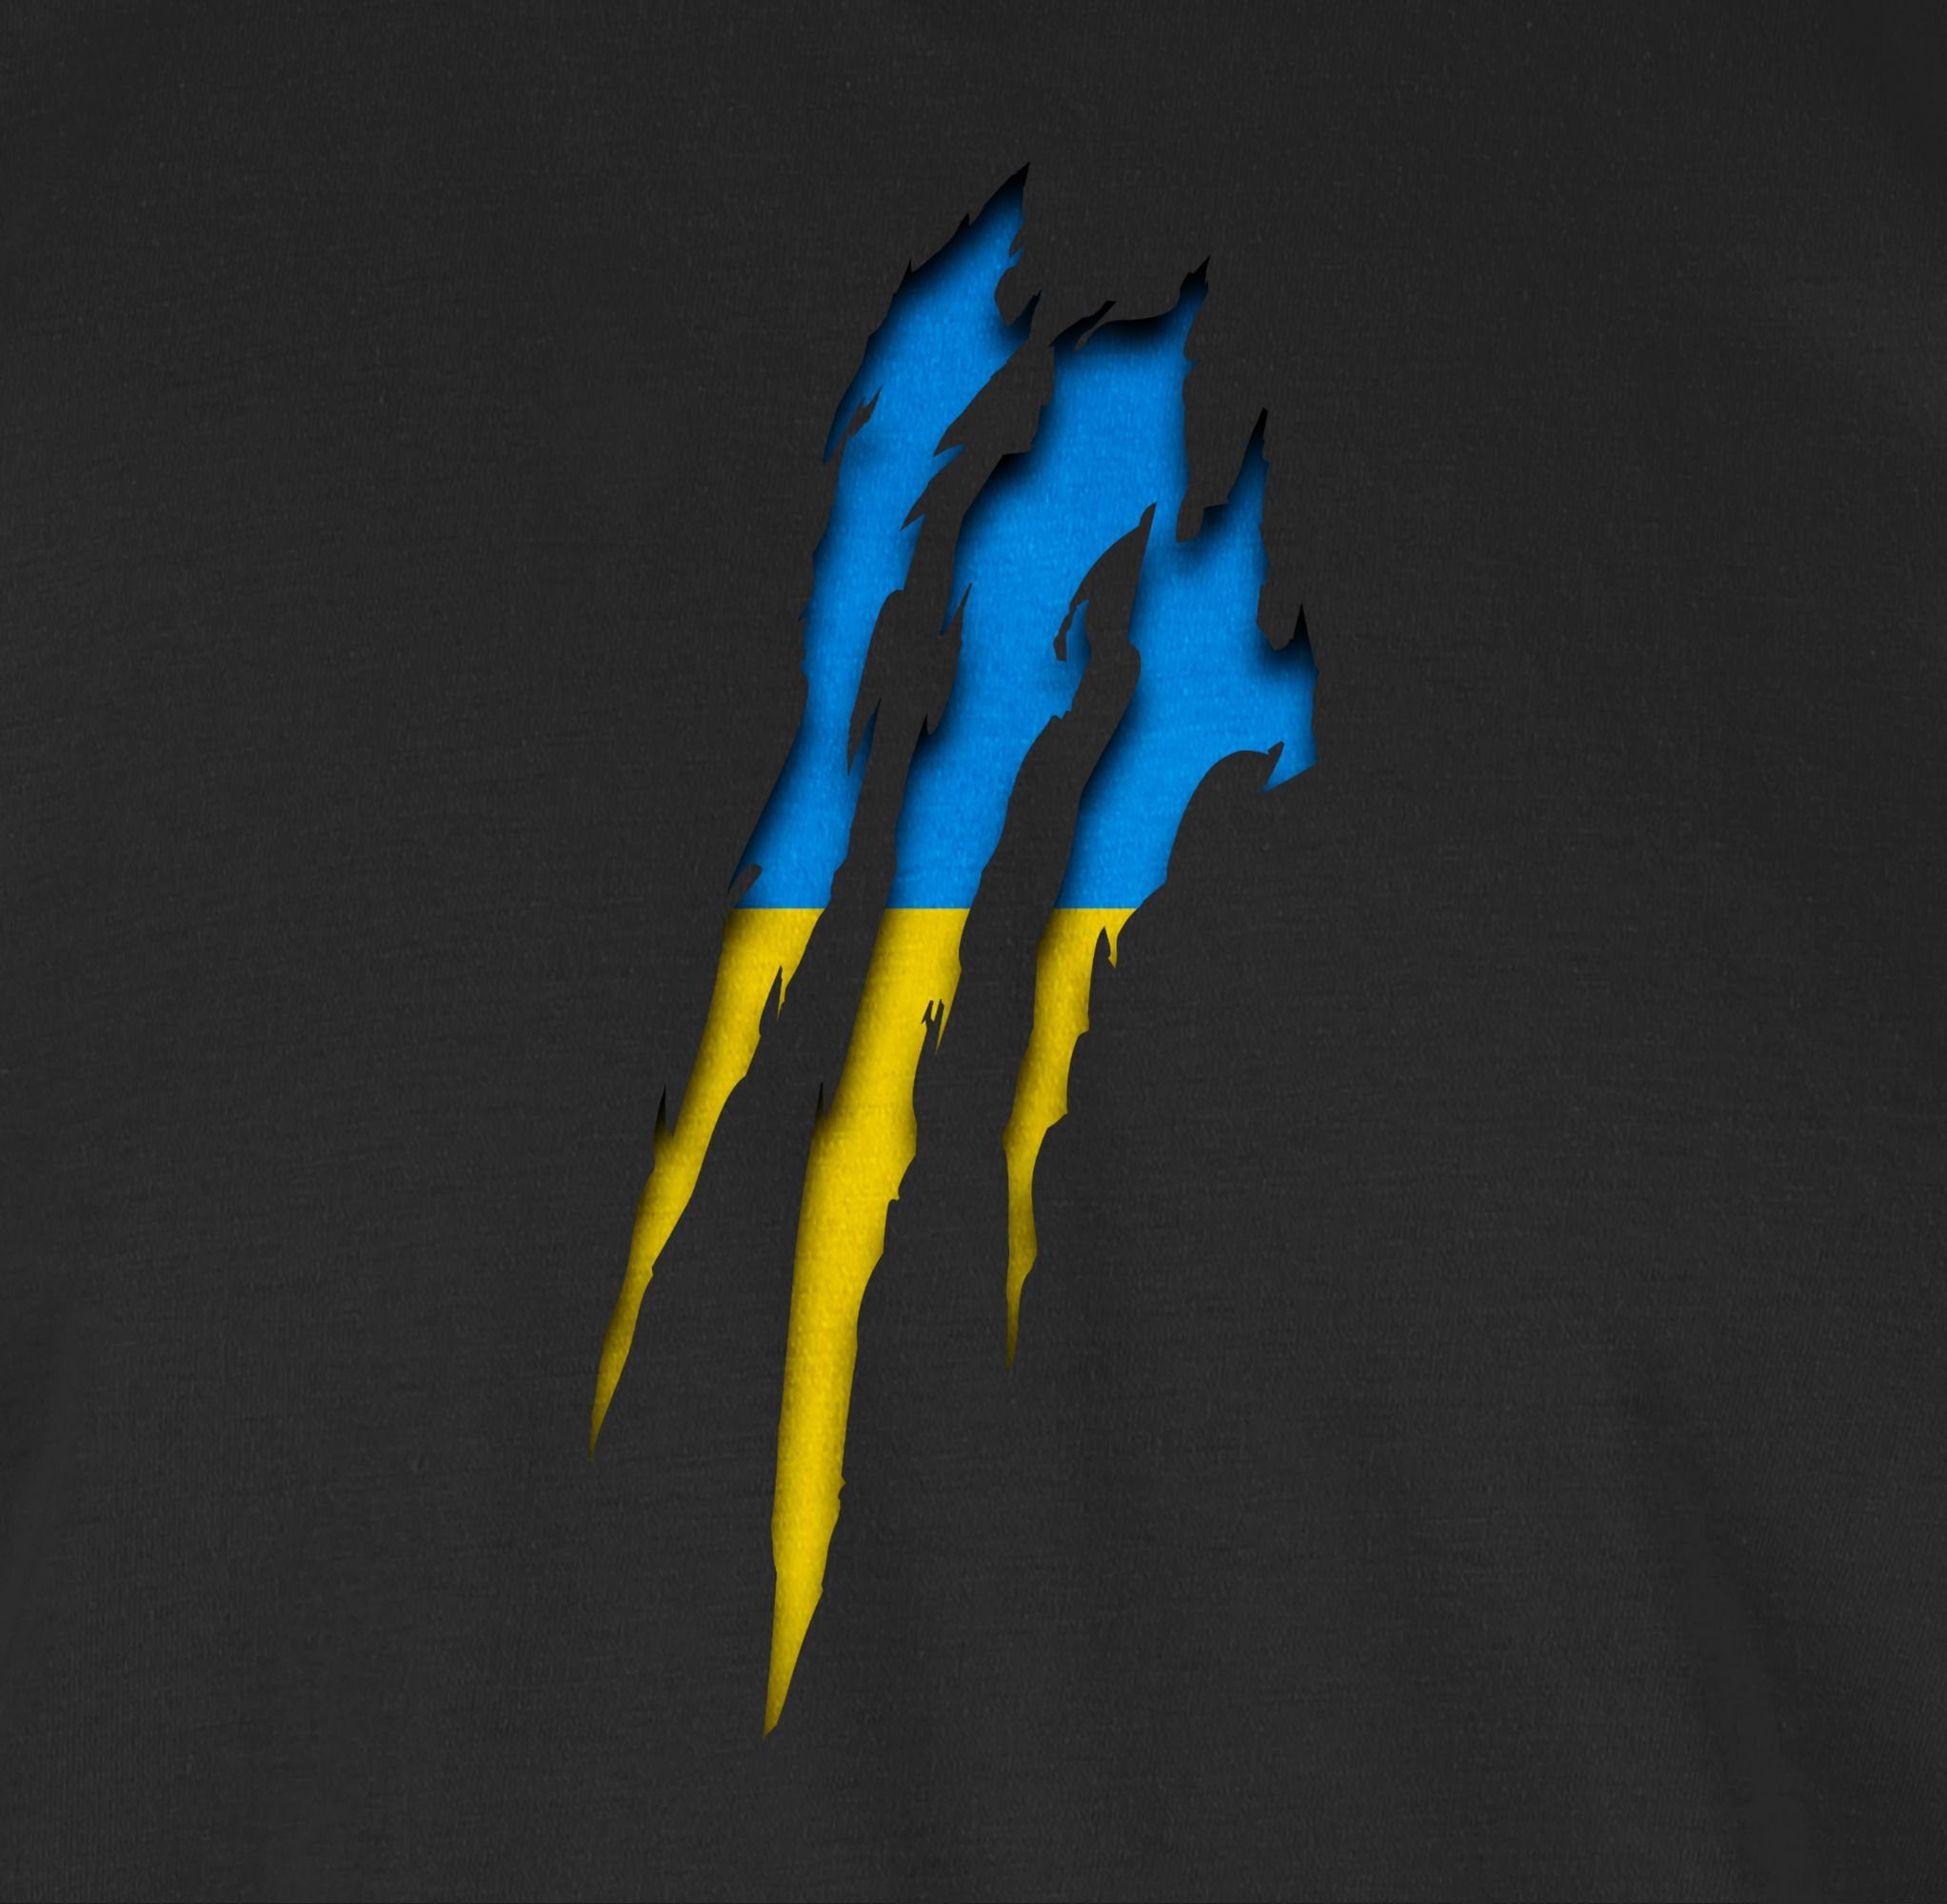 Krallenspuren T-Shirt Shirtracer Ukraine Wappen Schwarz Länder 1